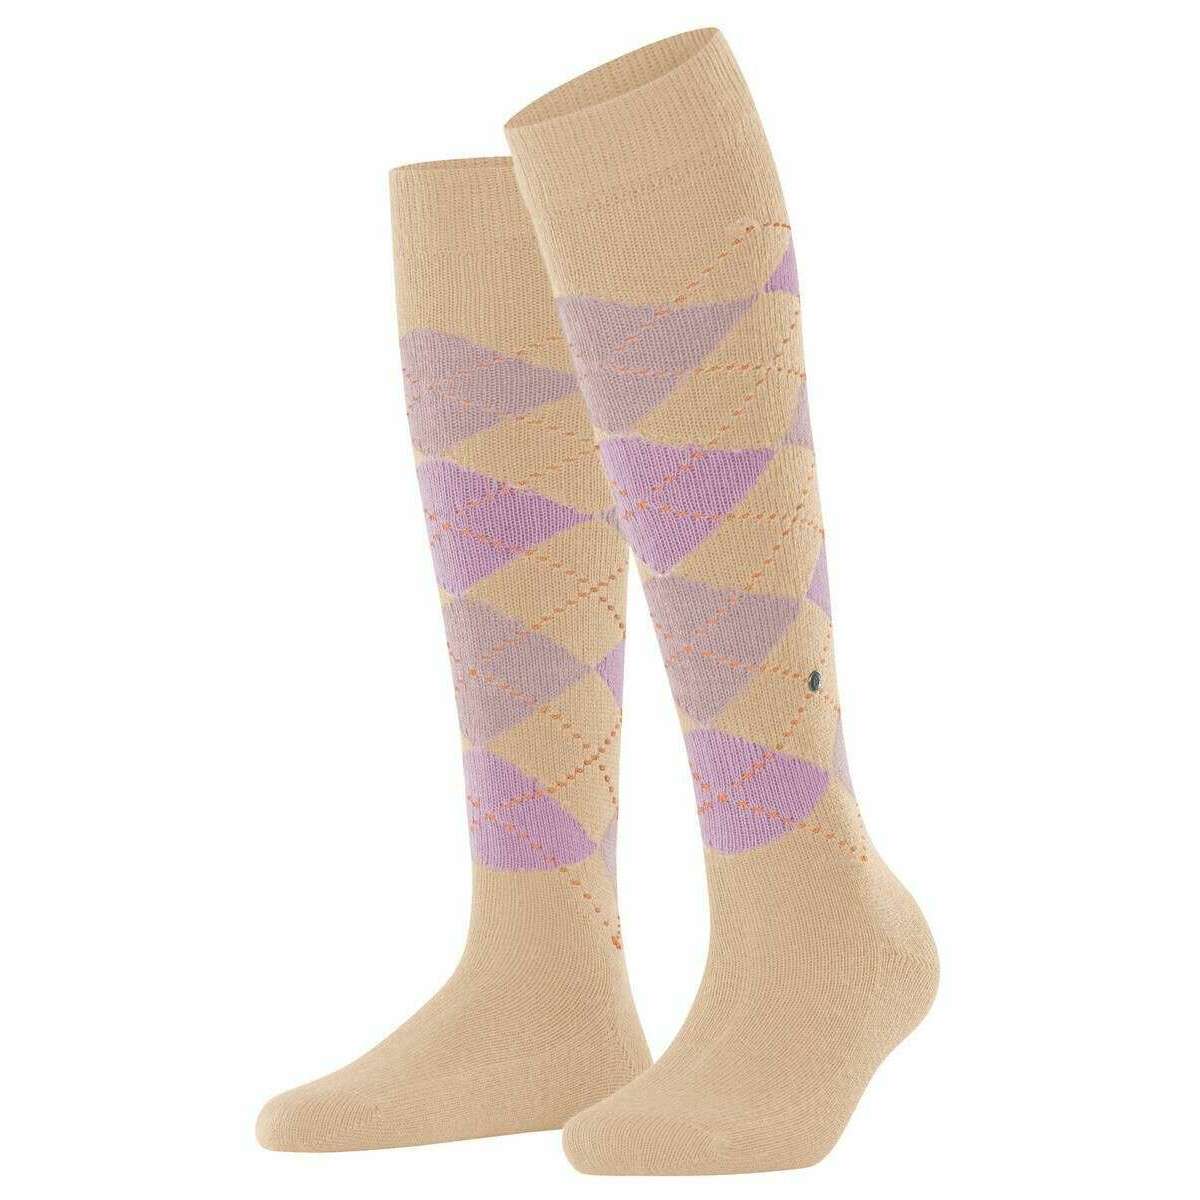 Burlington Whitby Knee High Socks - Camel Beige/Purple